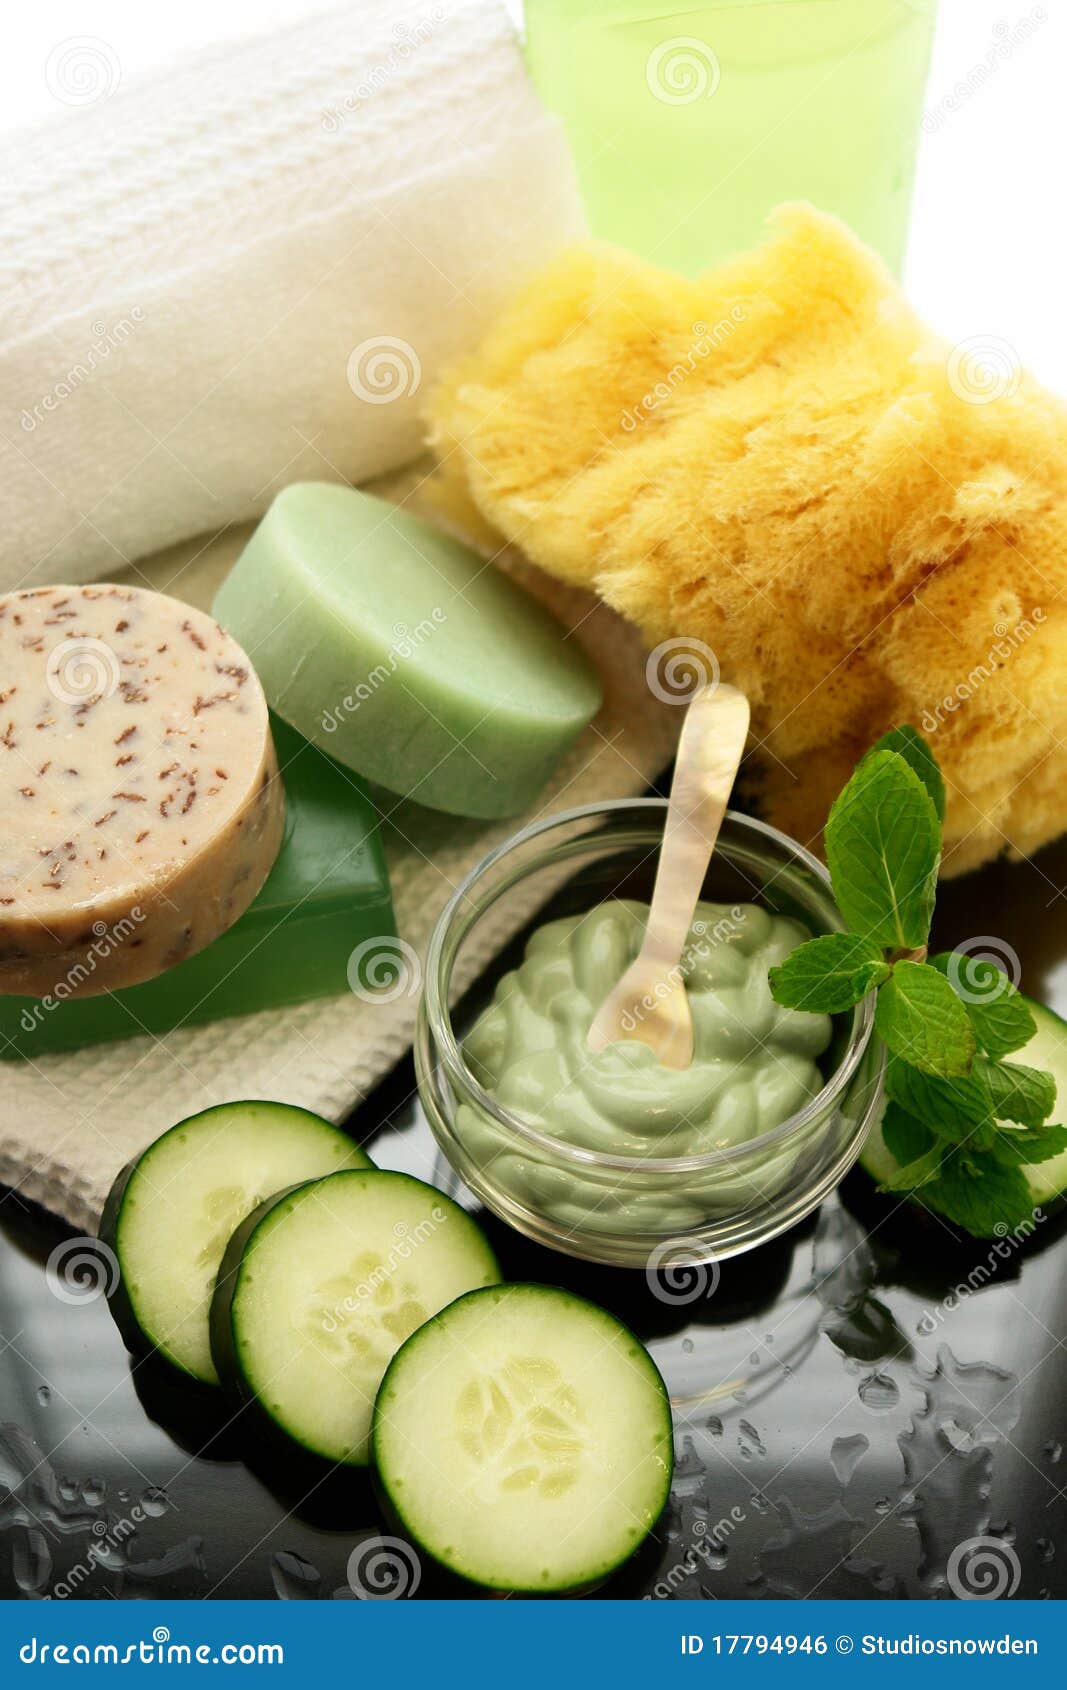 Cucumber Mint Spa Treatment Stock Photo - Image of scene, towel: 17794946